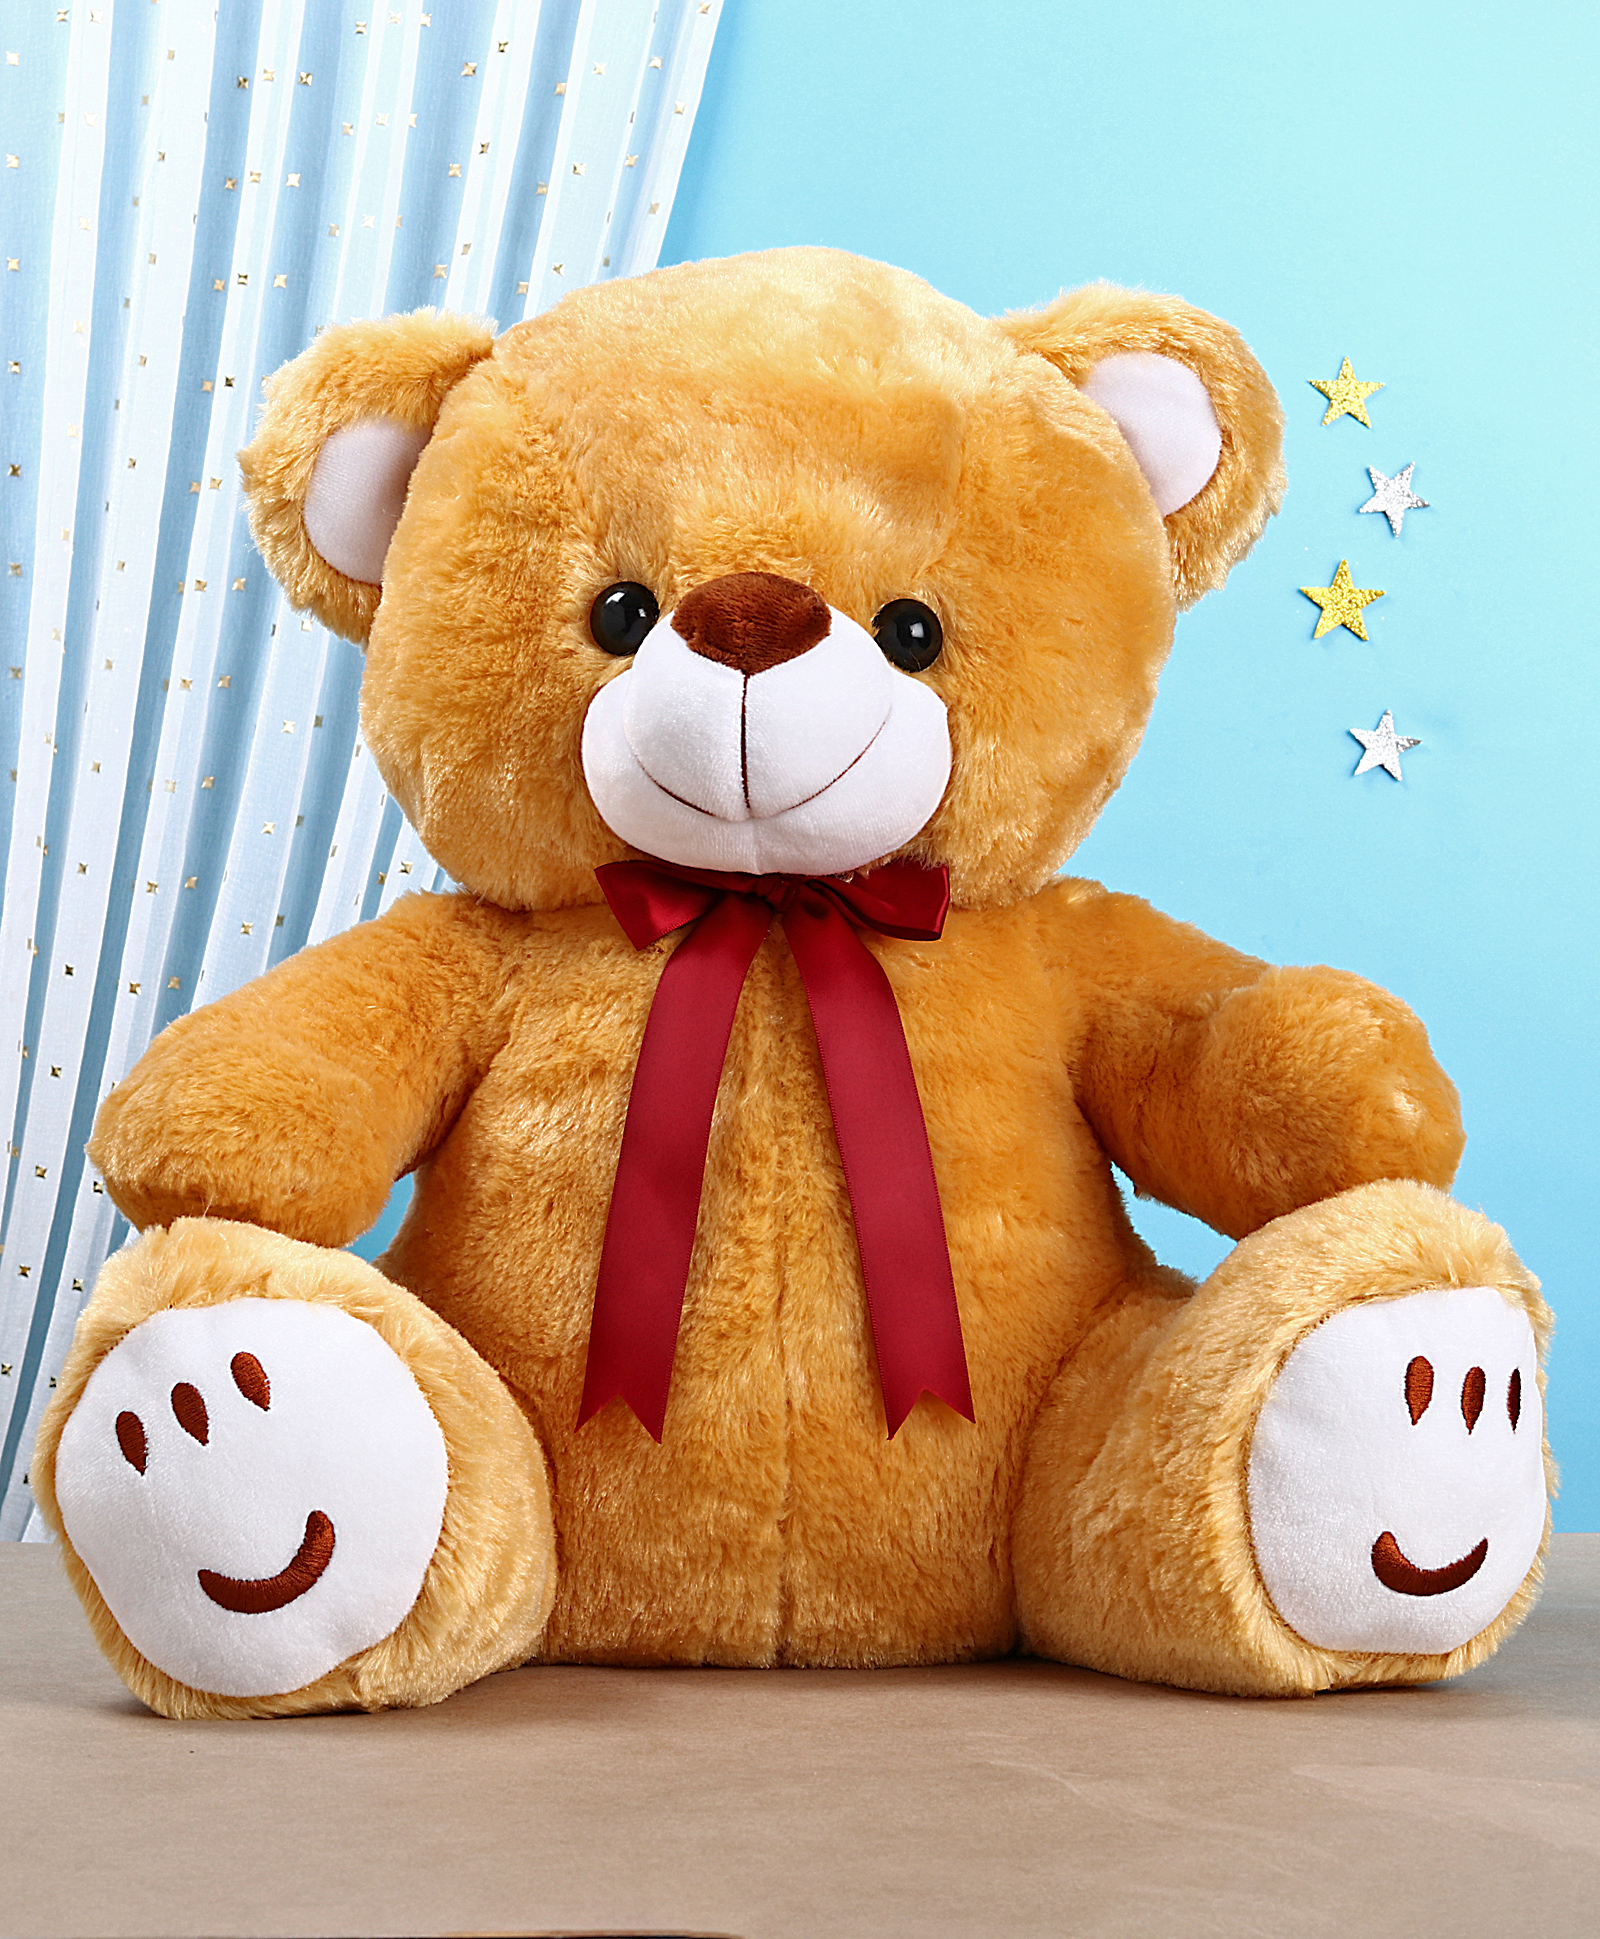 teddy bear firstcry